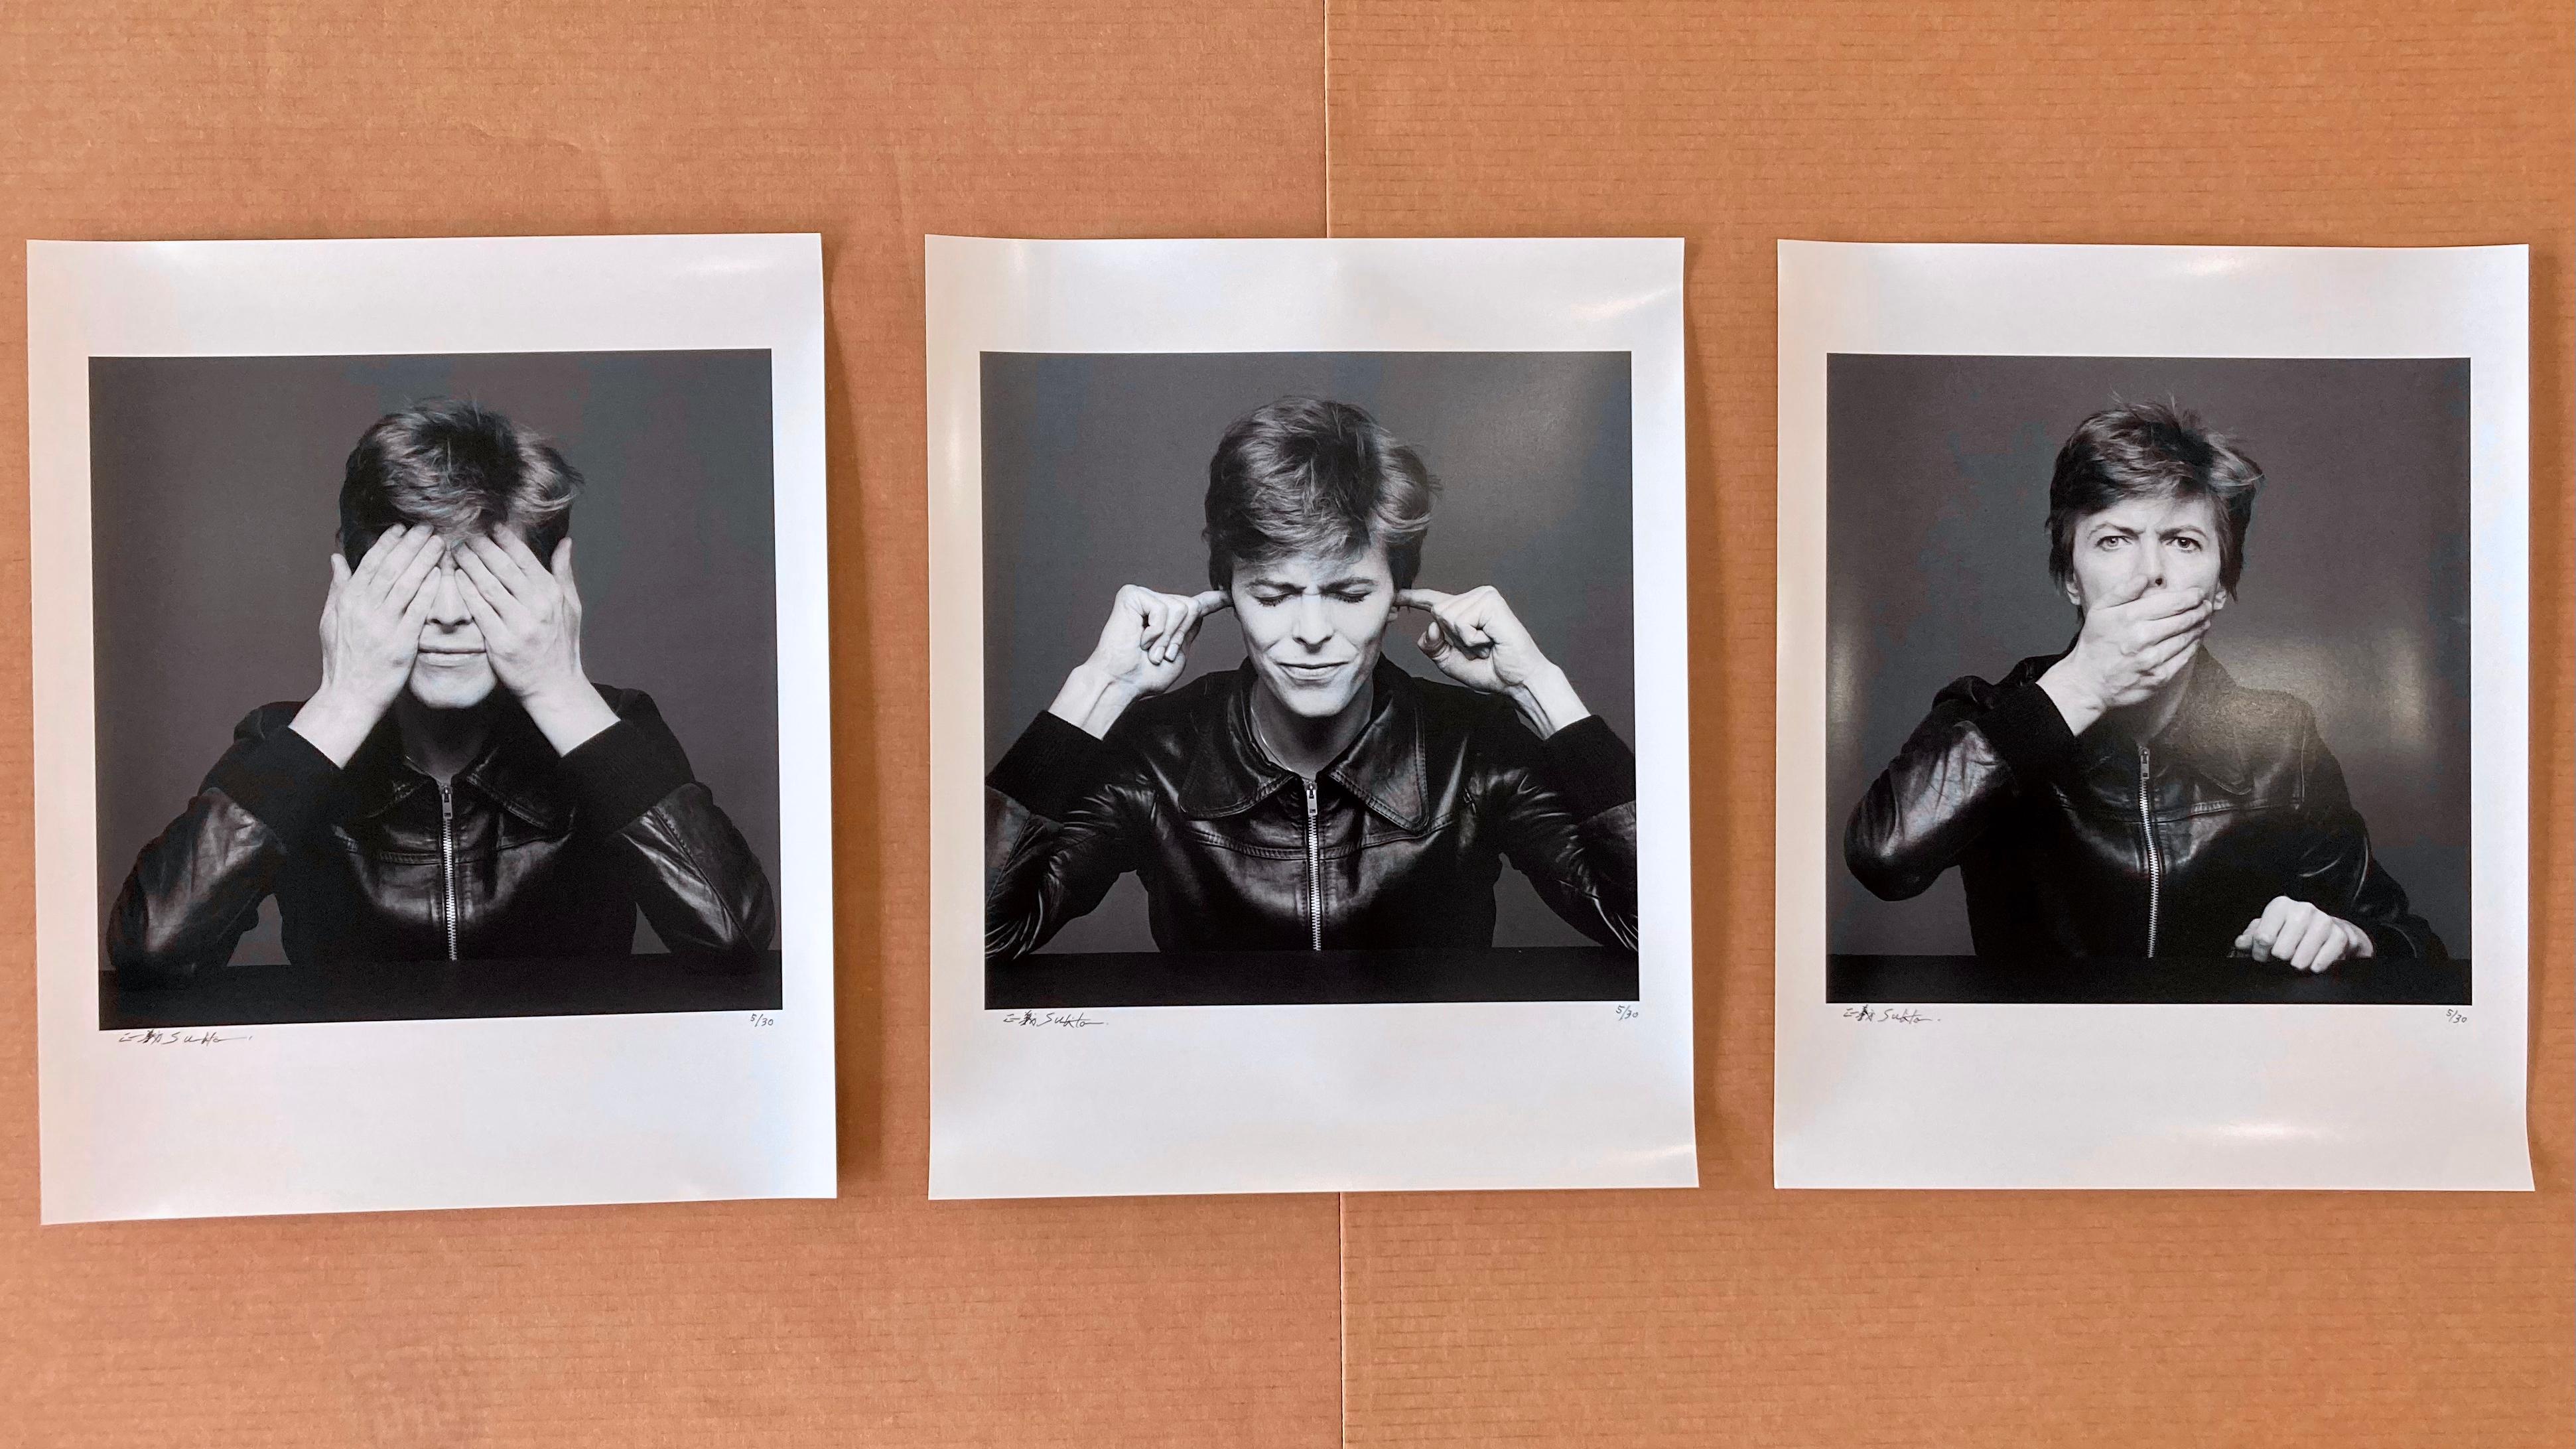 Masayoshi Sukita Portrait Photograph - David Bowie 1977 Heroes session - set of three prints